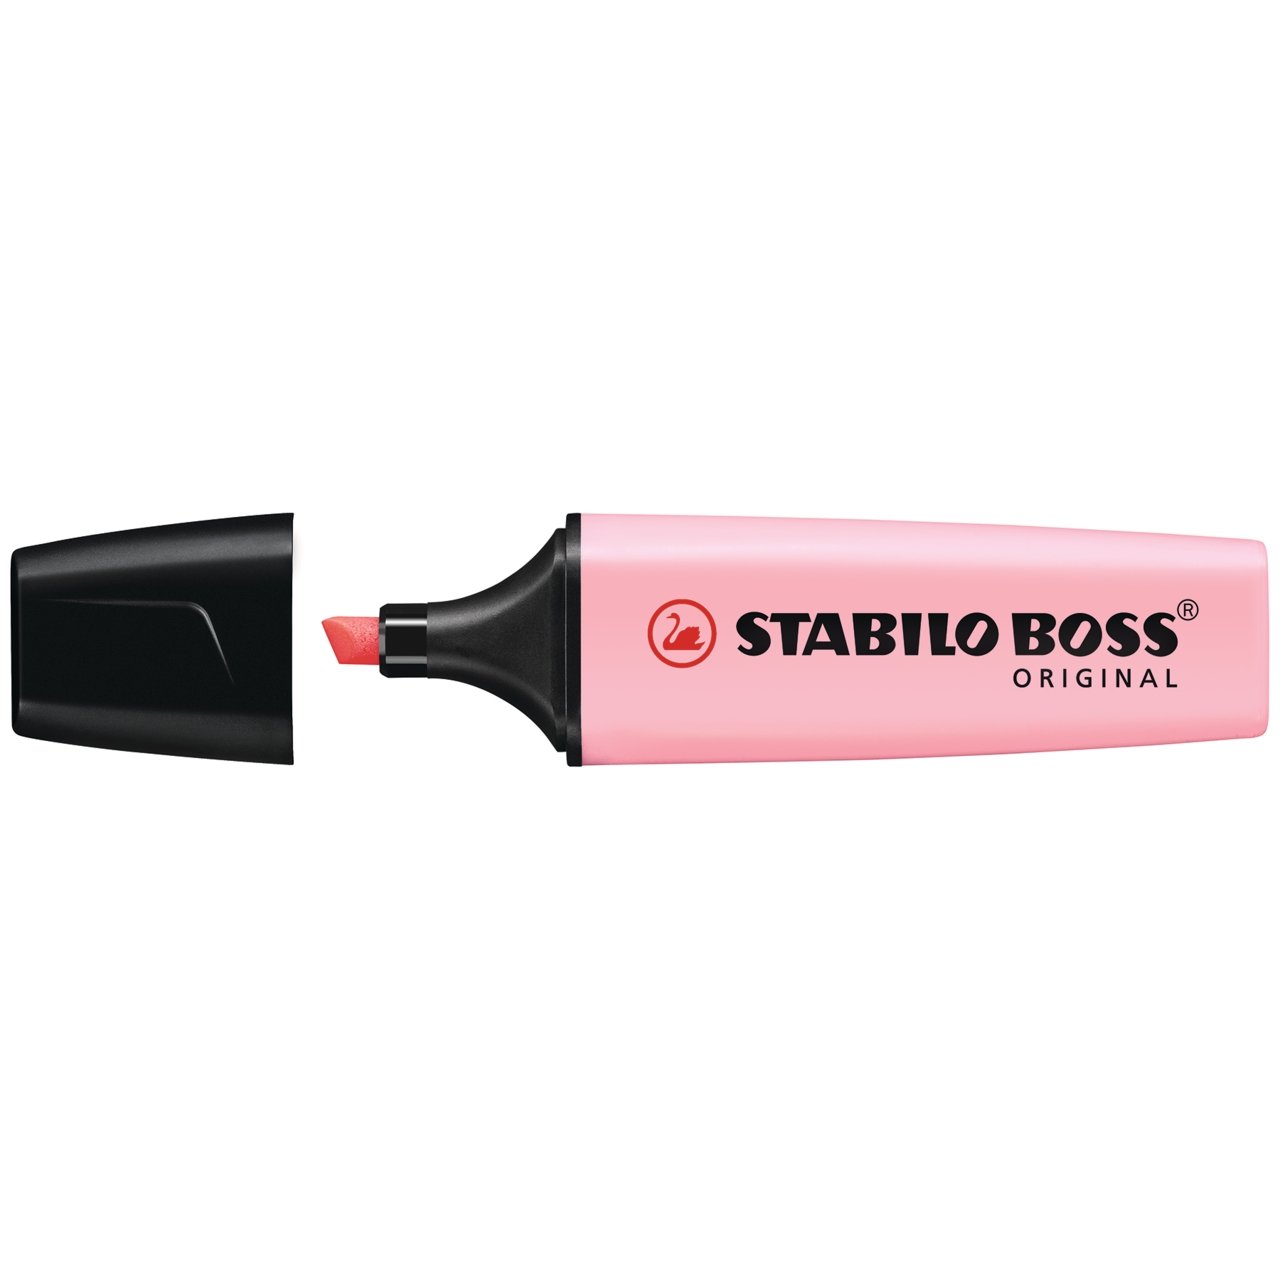 Stabilo BOSS Original Highlighter - Blush Pink - merriartist.com